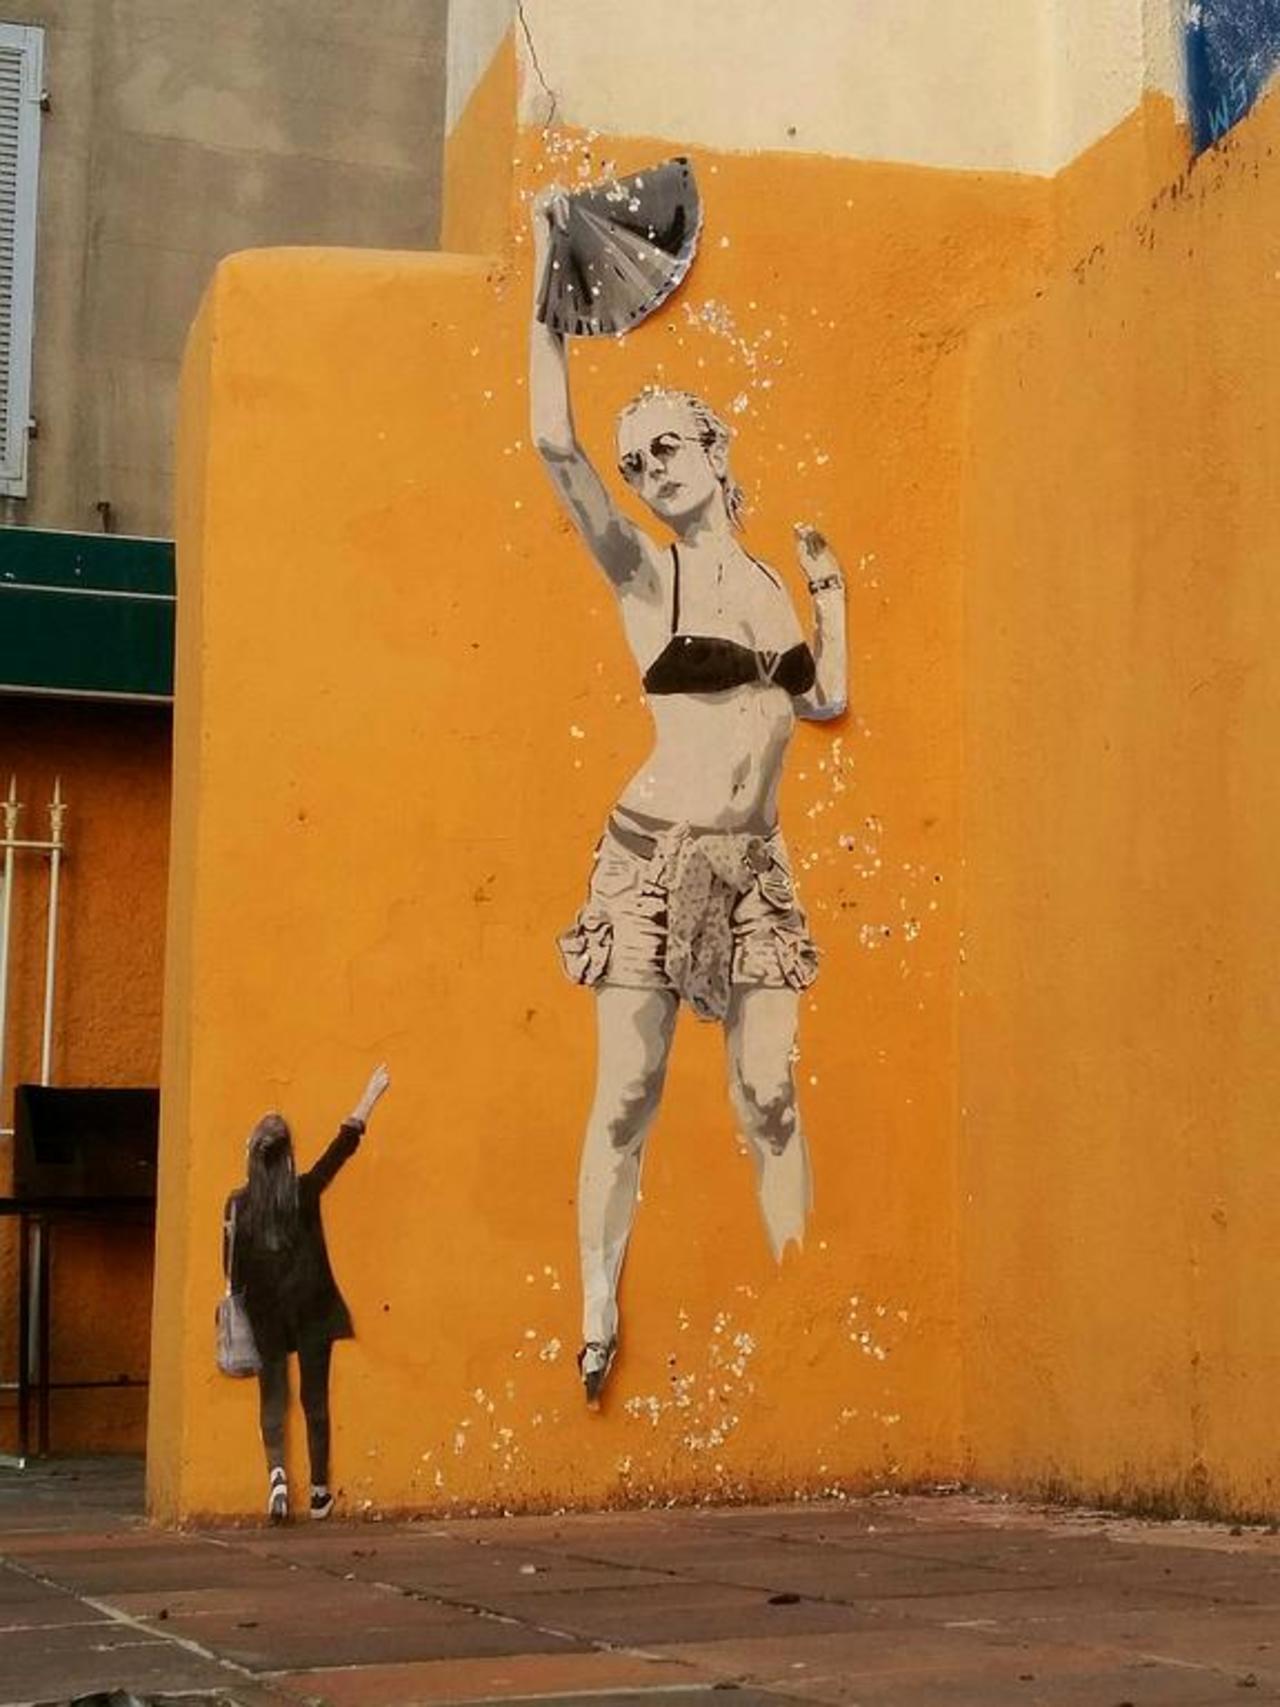 Street Art by anonymous in #Marseille http://www.urbacolors.com #art #mural #graffiti #streetart http://t.co/VoRmSvZ3Yj